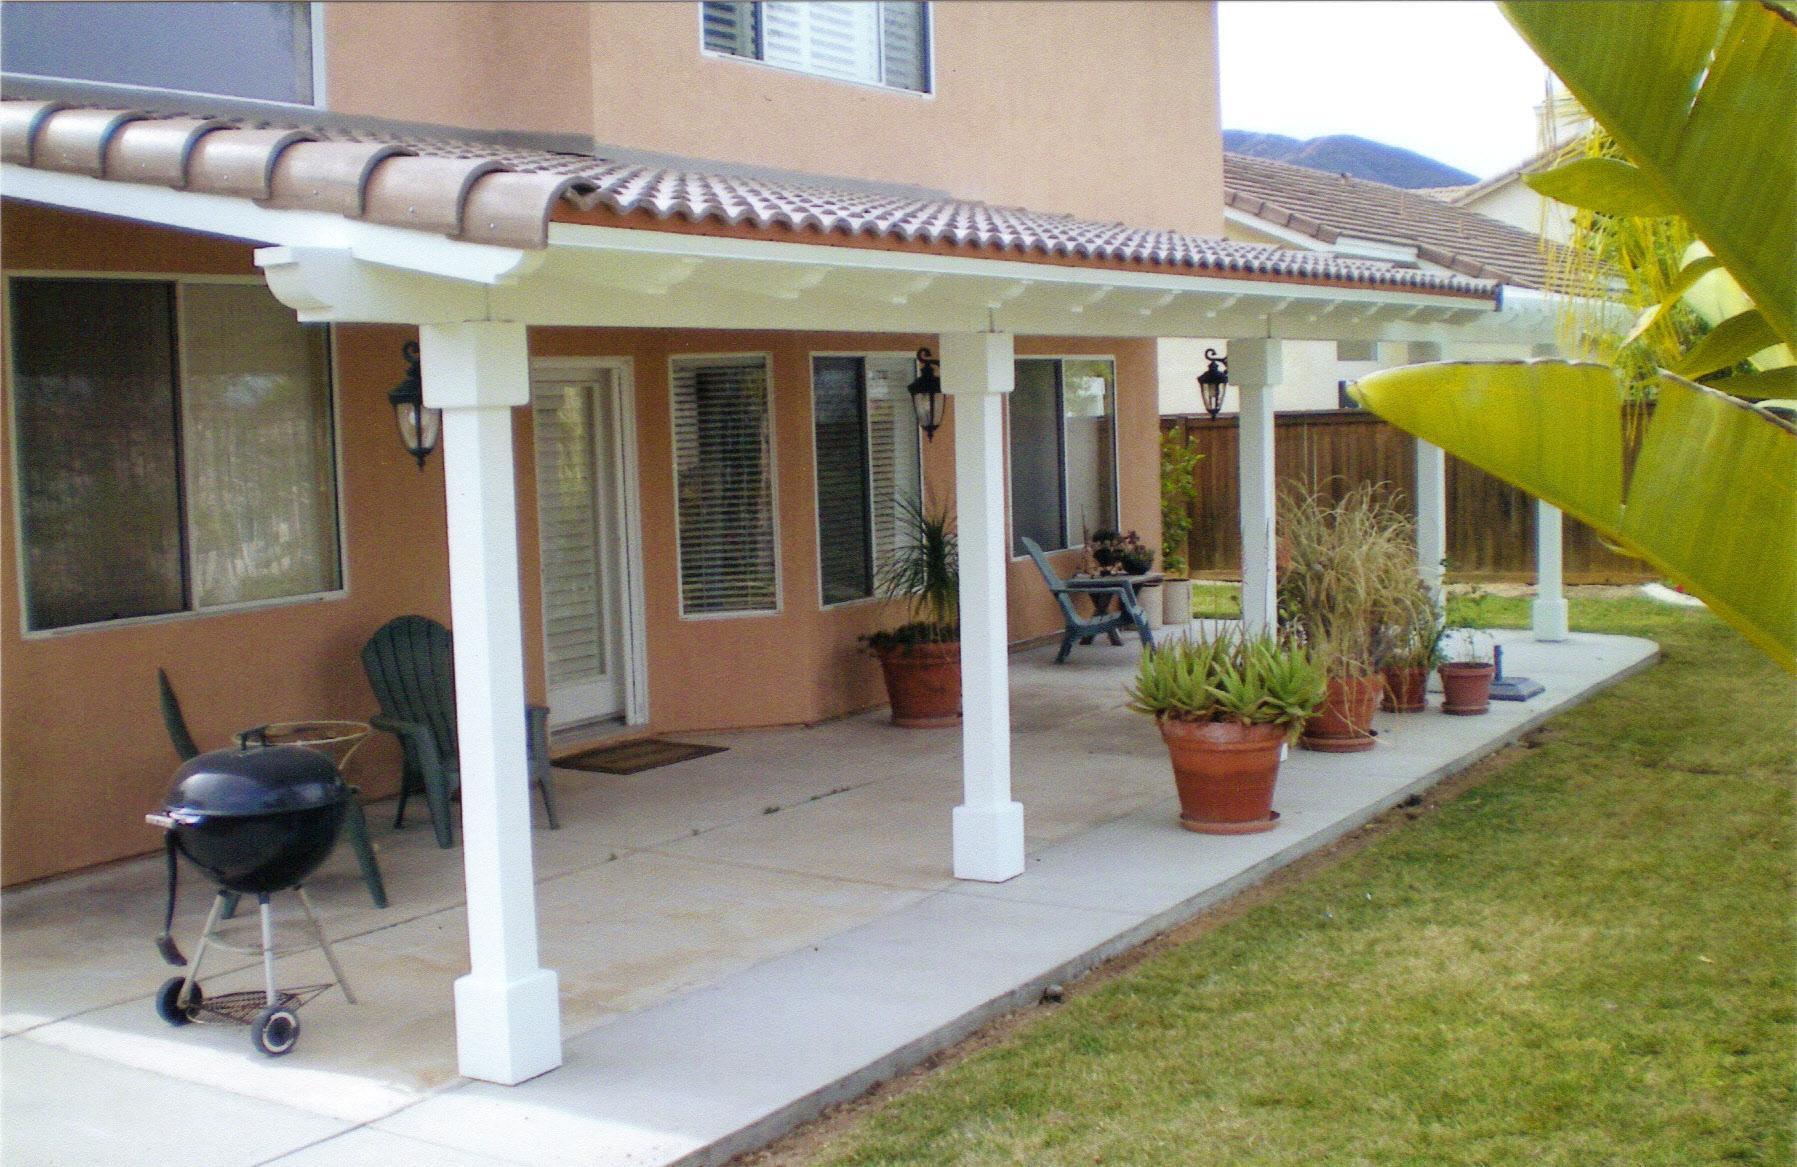 Backyard Patio Roof
 Backyard Patio Covers From Usefulness To Style – HomesFeed